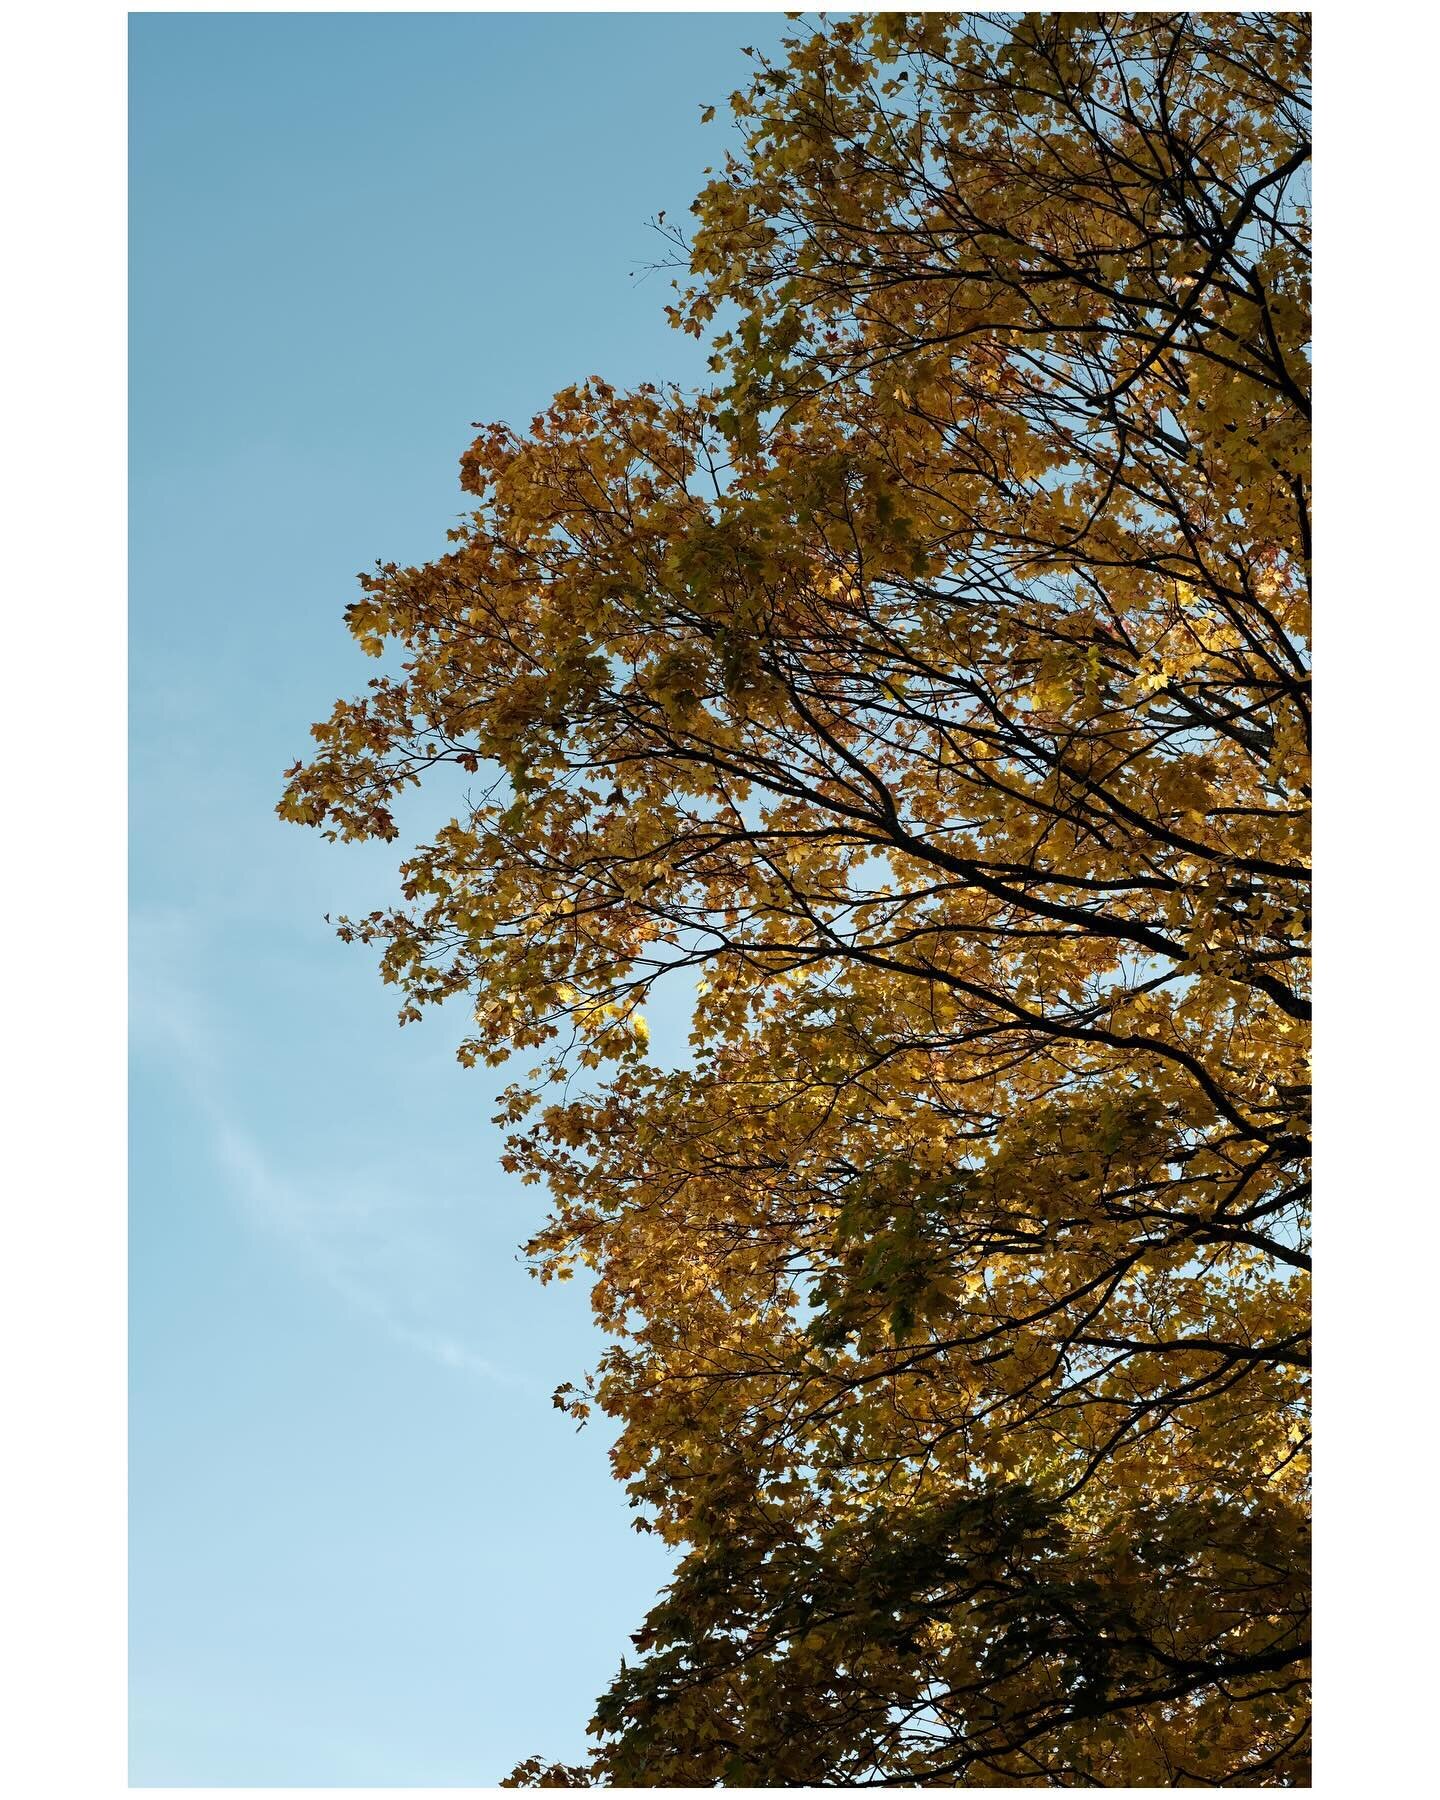 Yellow leaves

Stockholm, Sweden
October 2023

#stockholm #visitstockholm #viewstockholm #sweden #sverige #fall #leaves